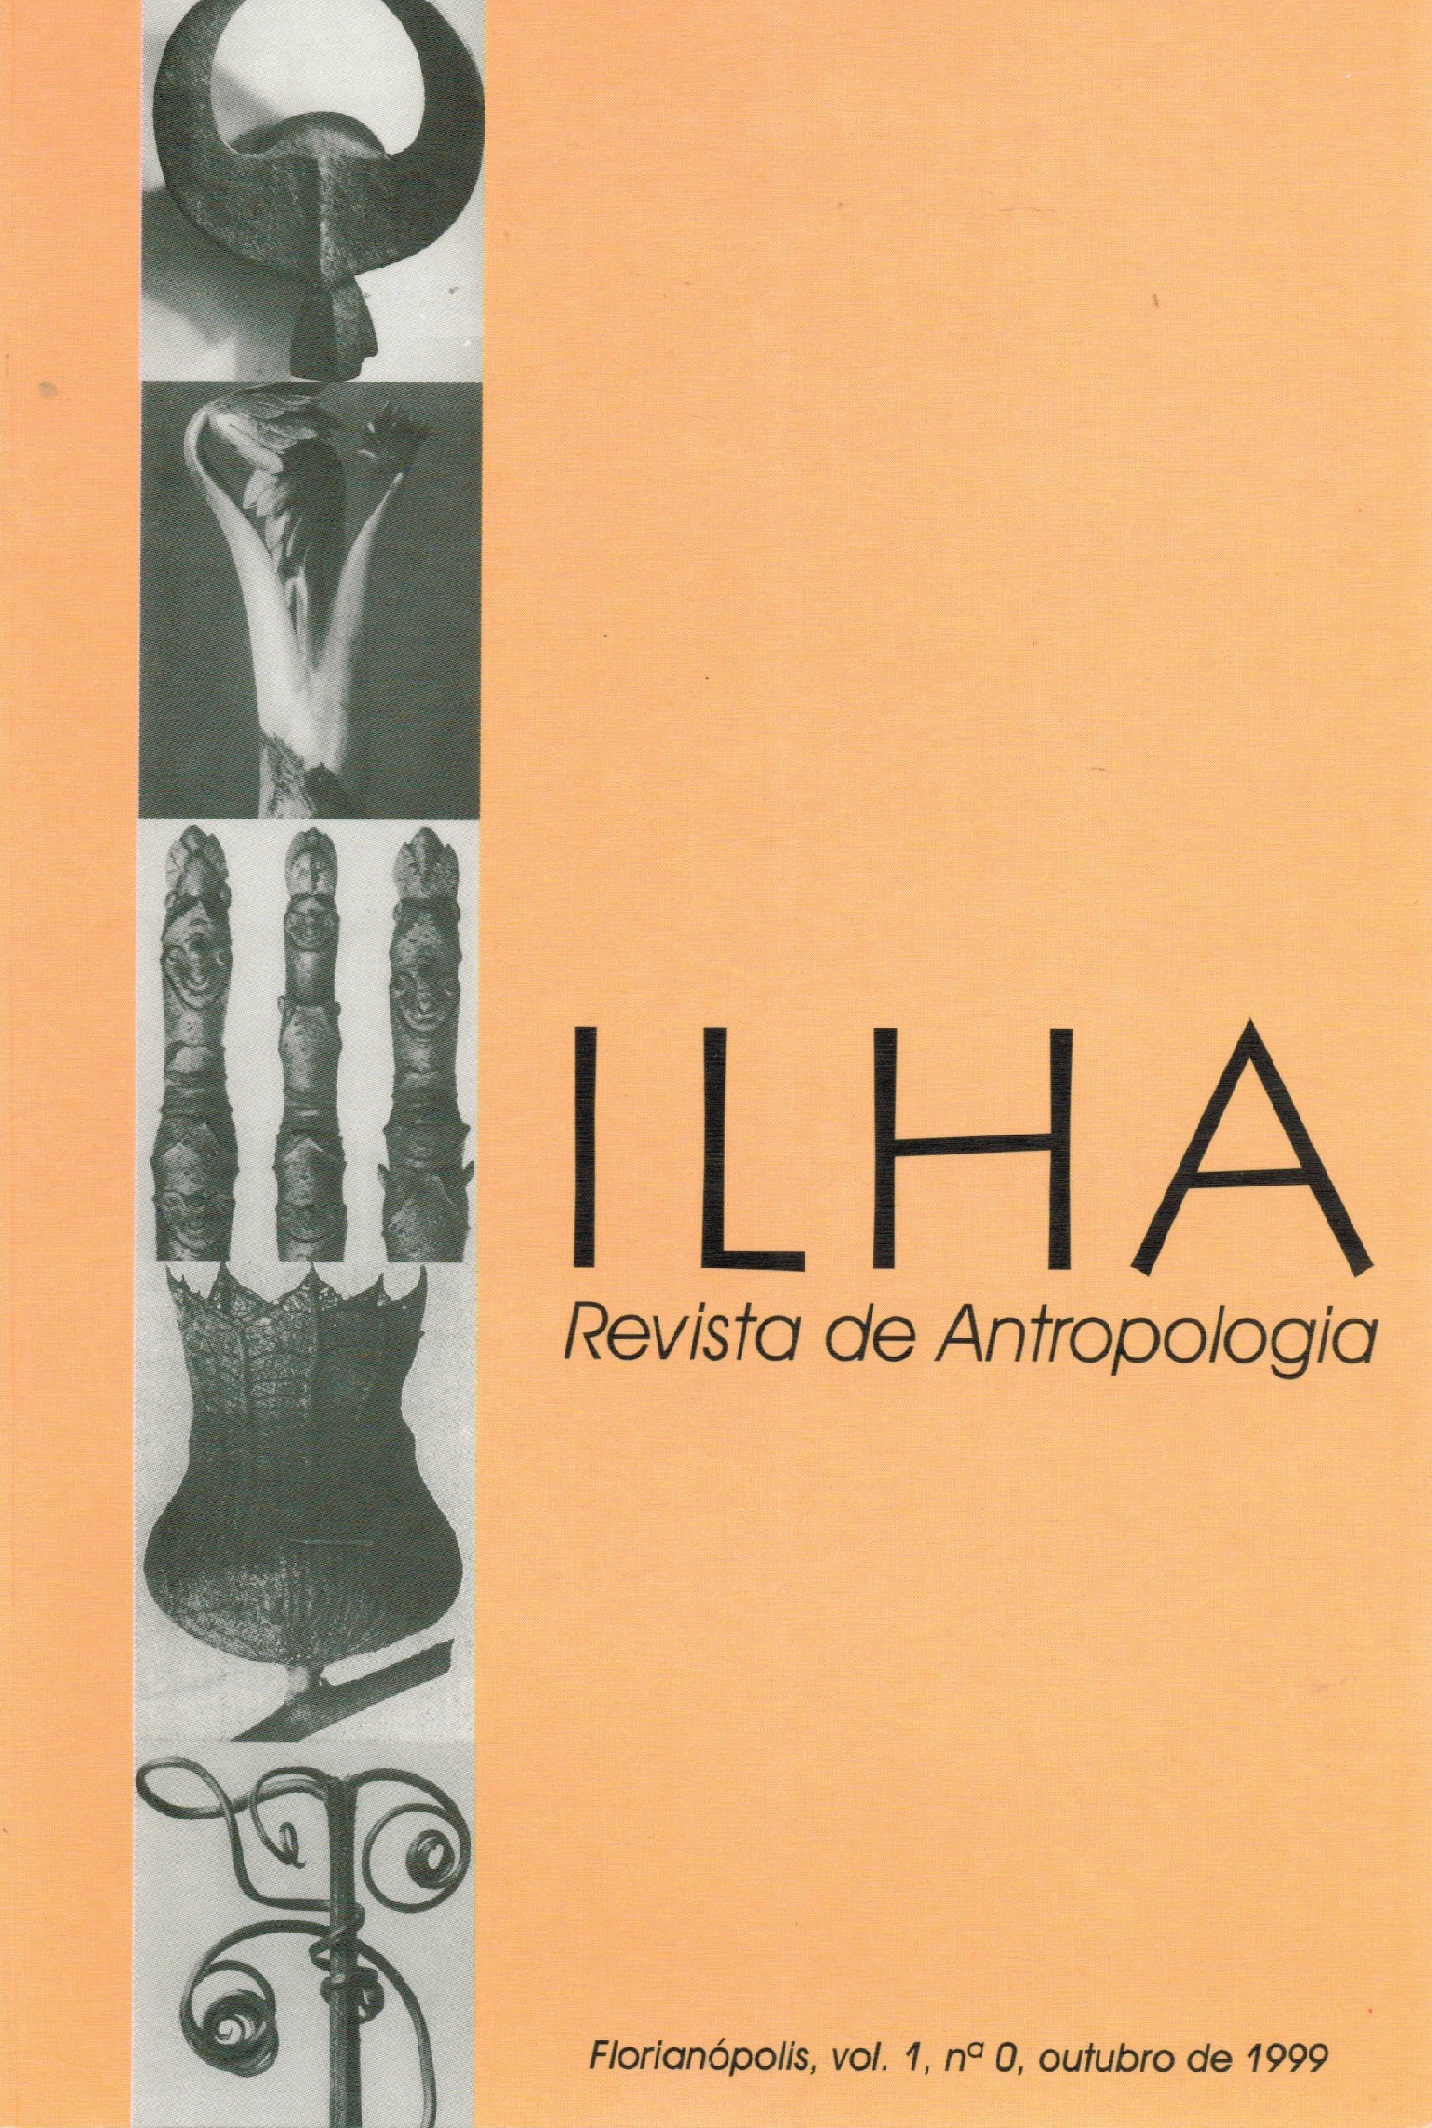 Editor deste volume: Professor Doutor Oscar Calavia Sáez